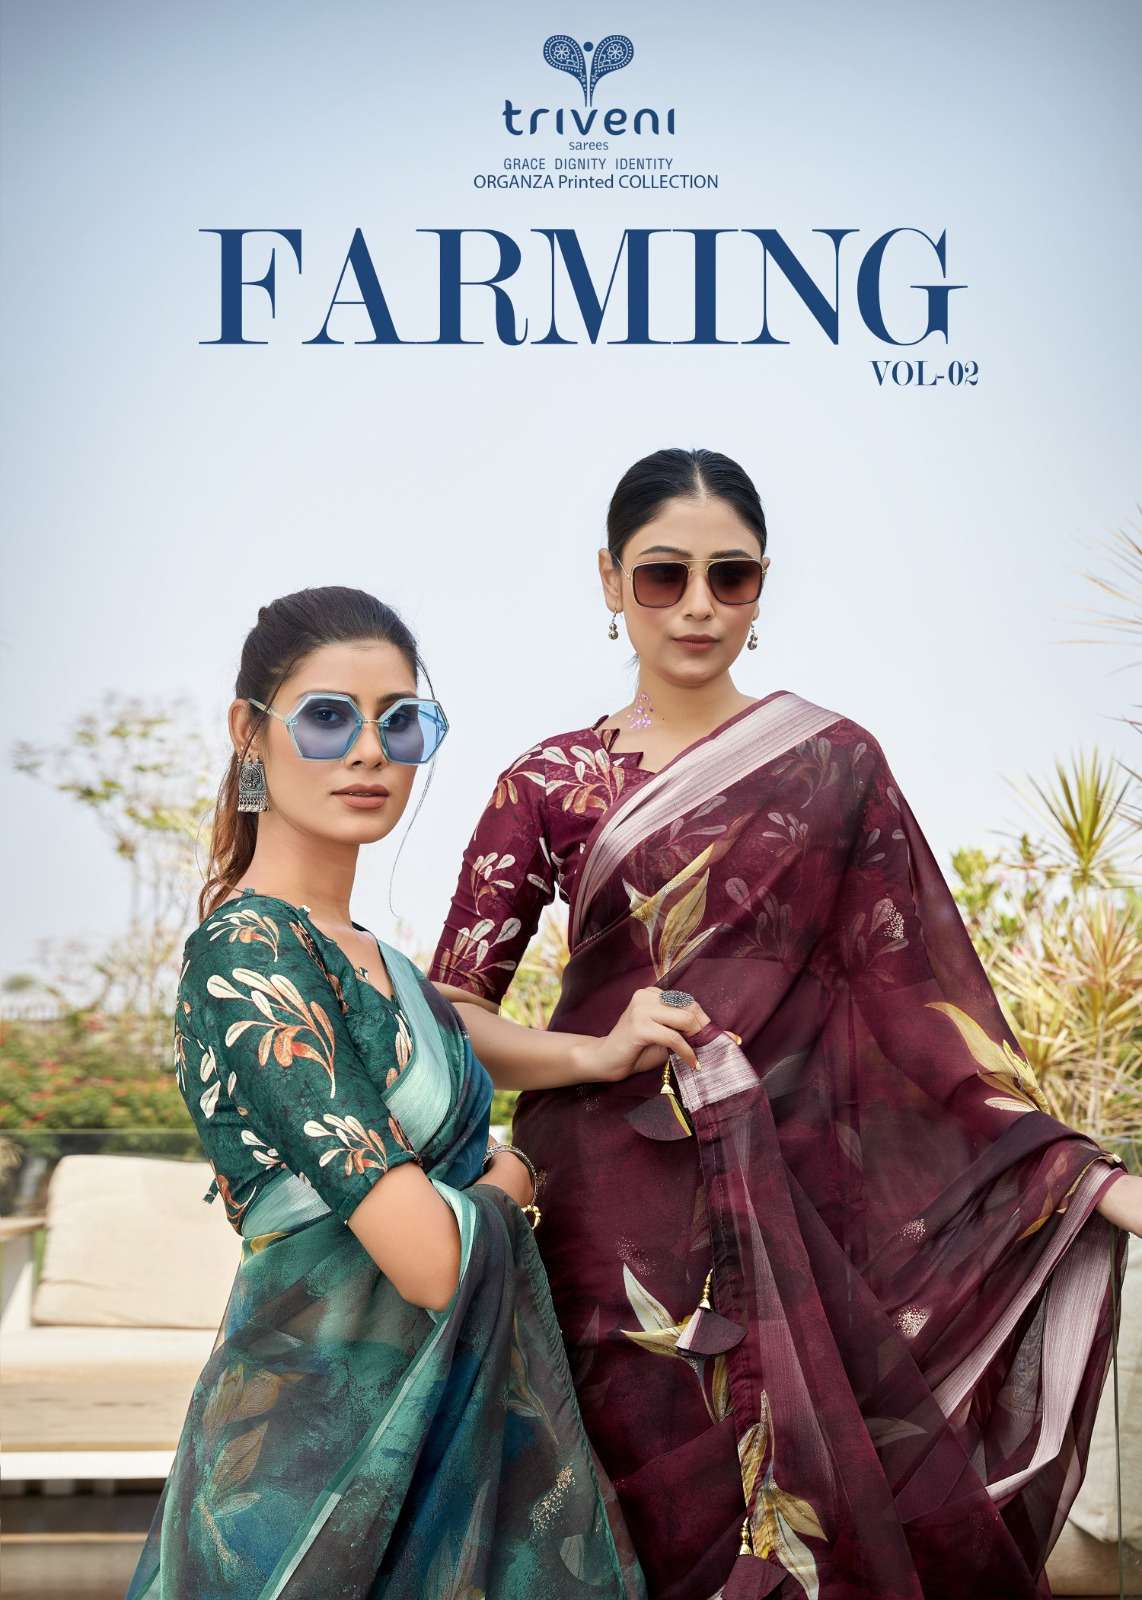 triveni farming vol 2 Organza Printed Collection sarees 